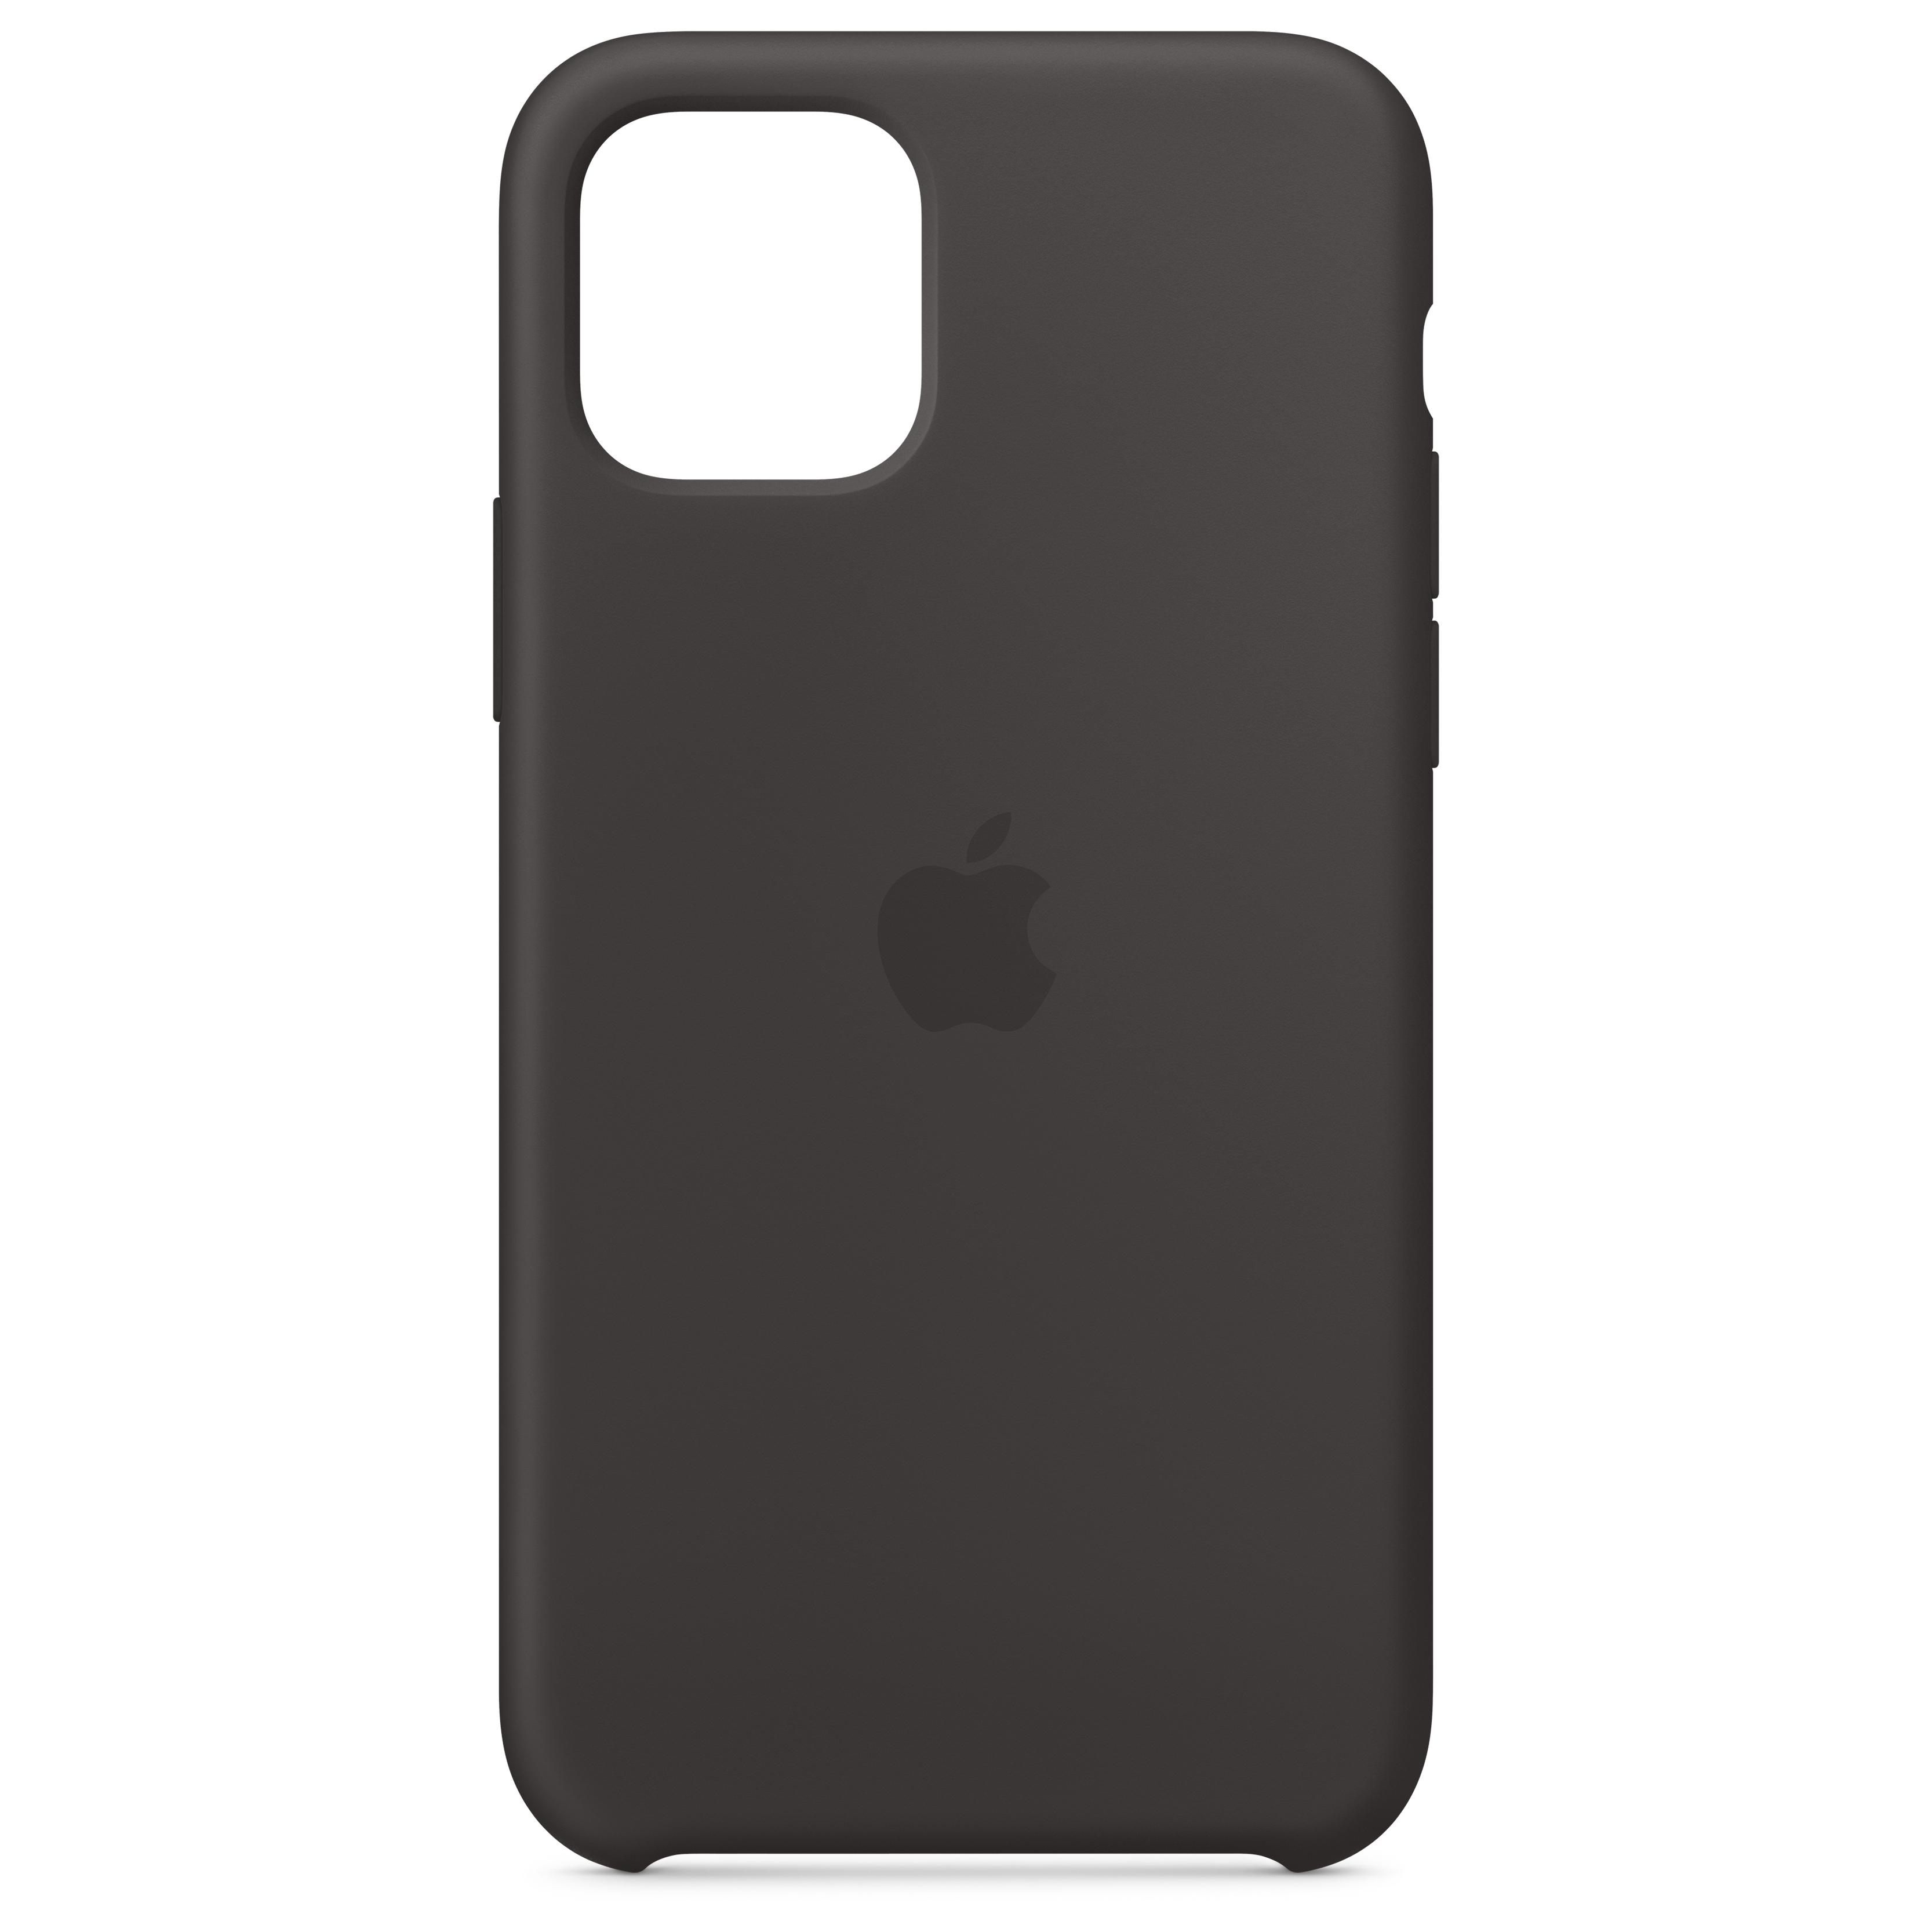 iPhone 11 Pro Silicone Case - Black - image 1 of 6